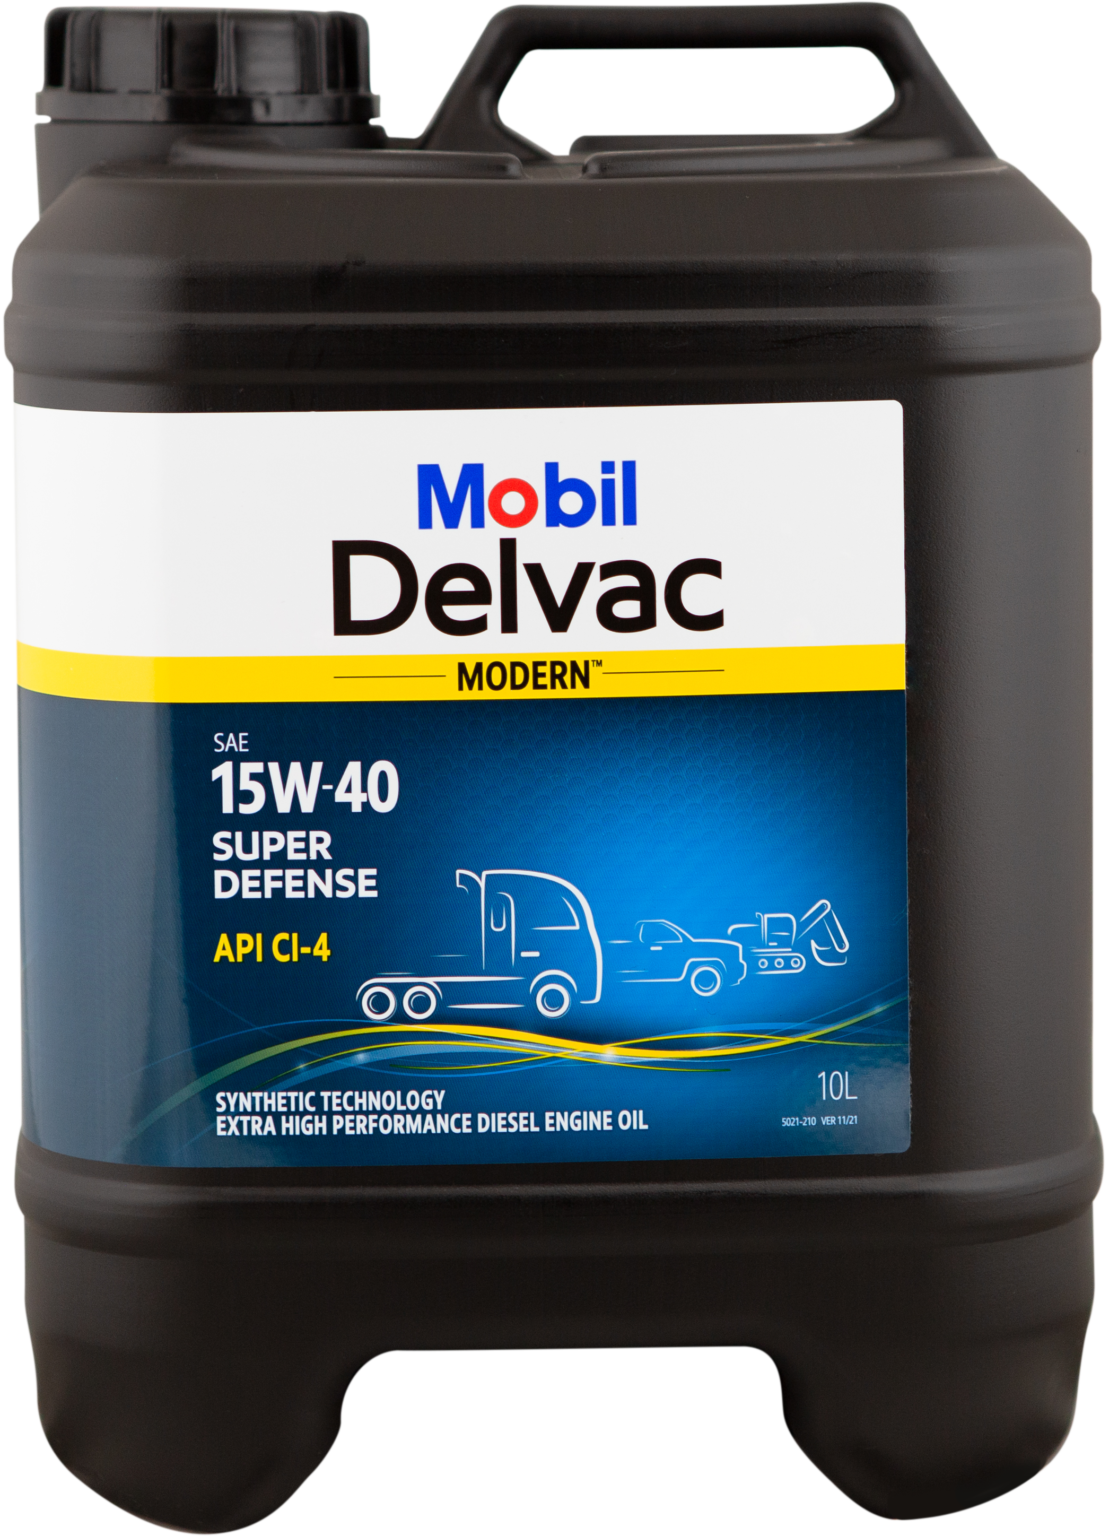 Mobil Delvac Modern 15W 40 SUPER DEFENSE Mobil 1 